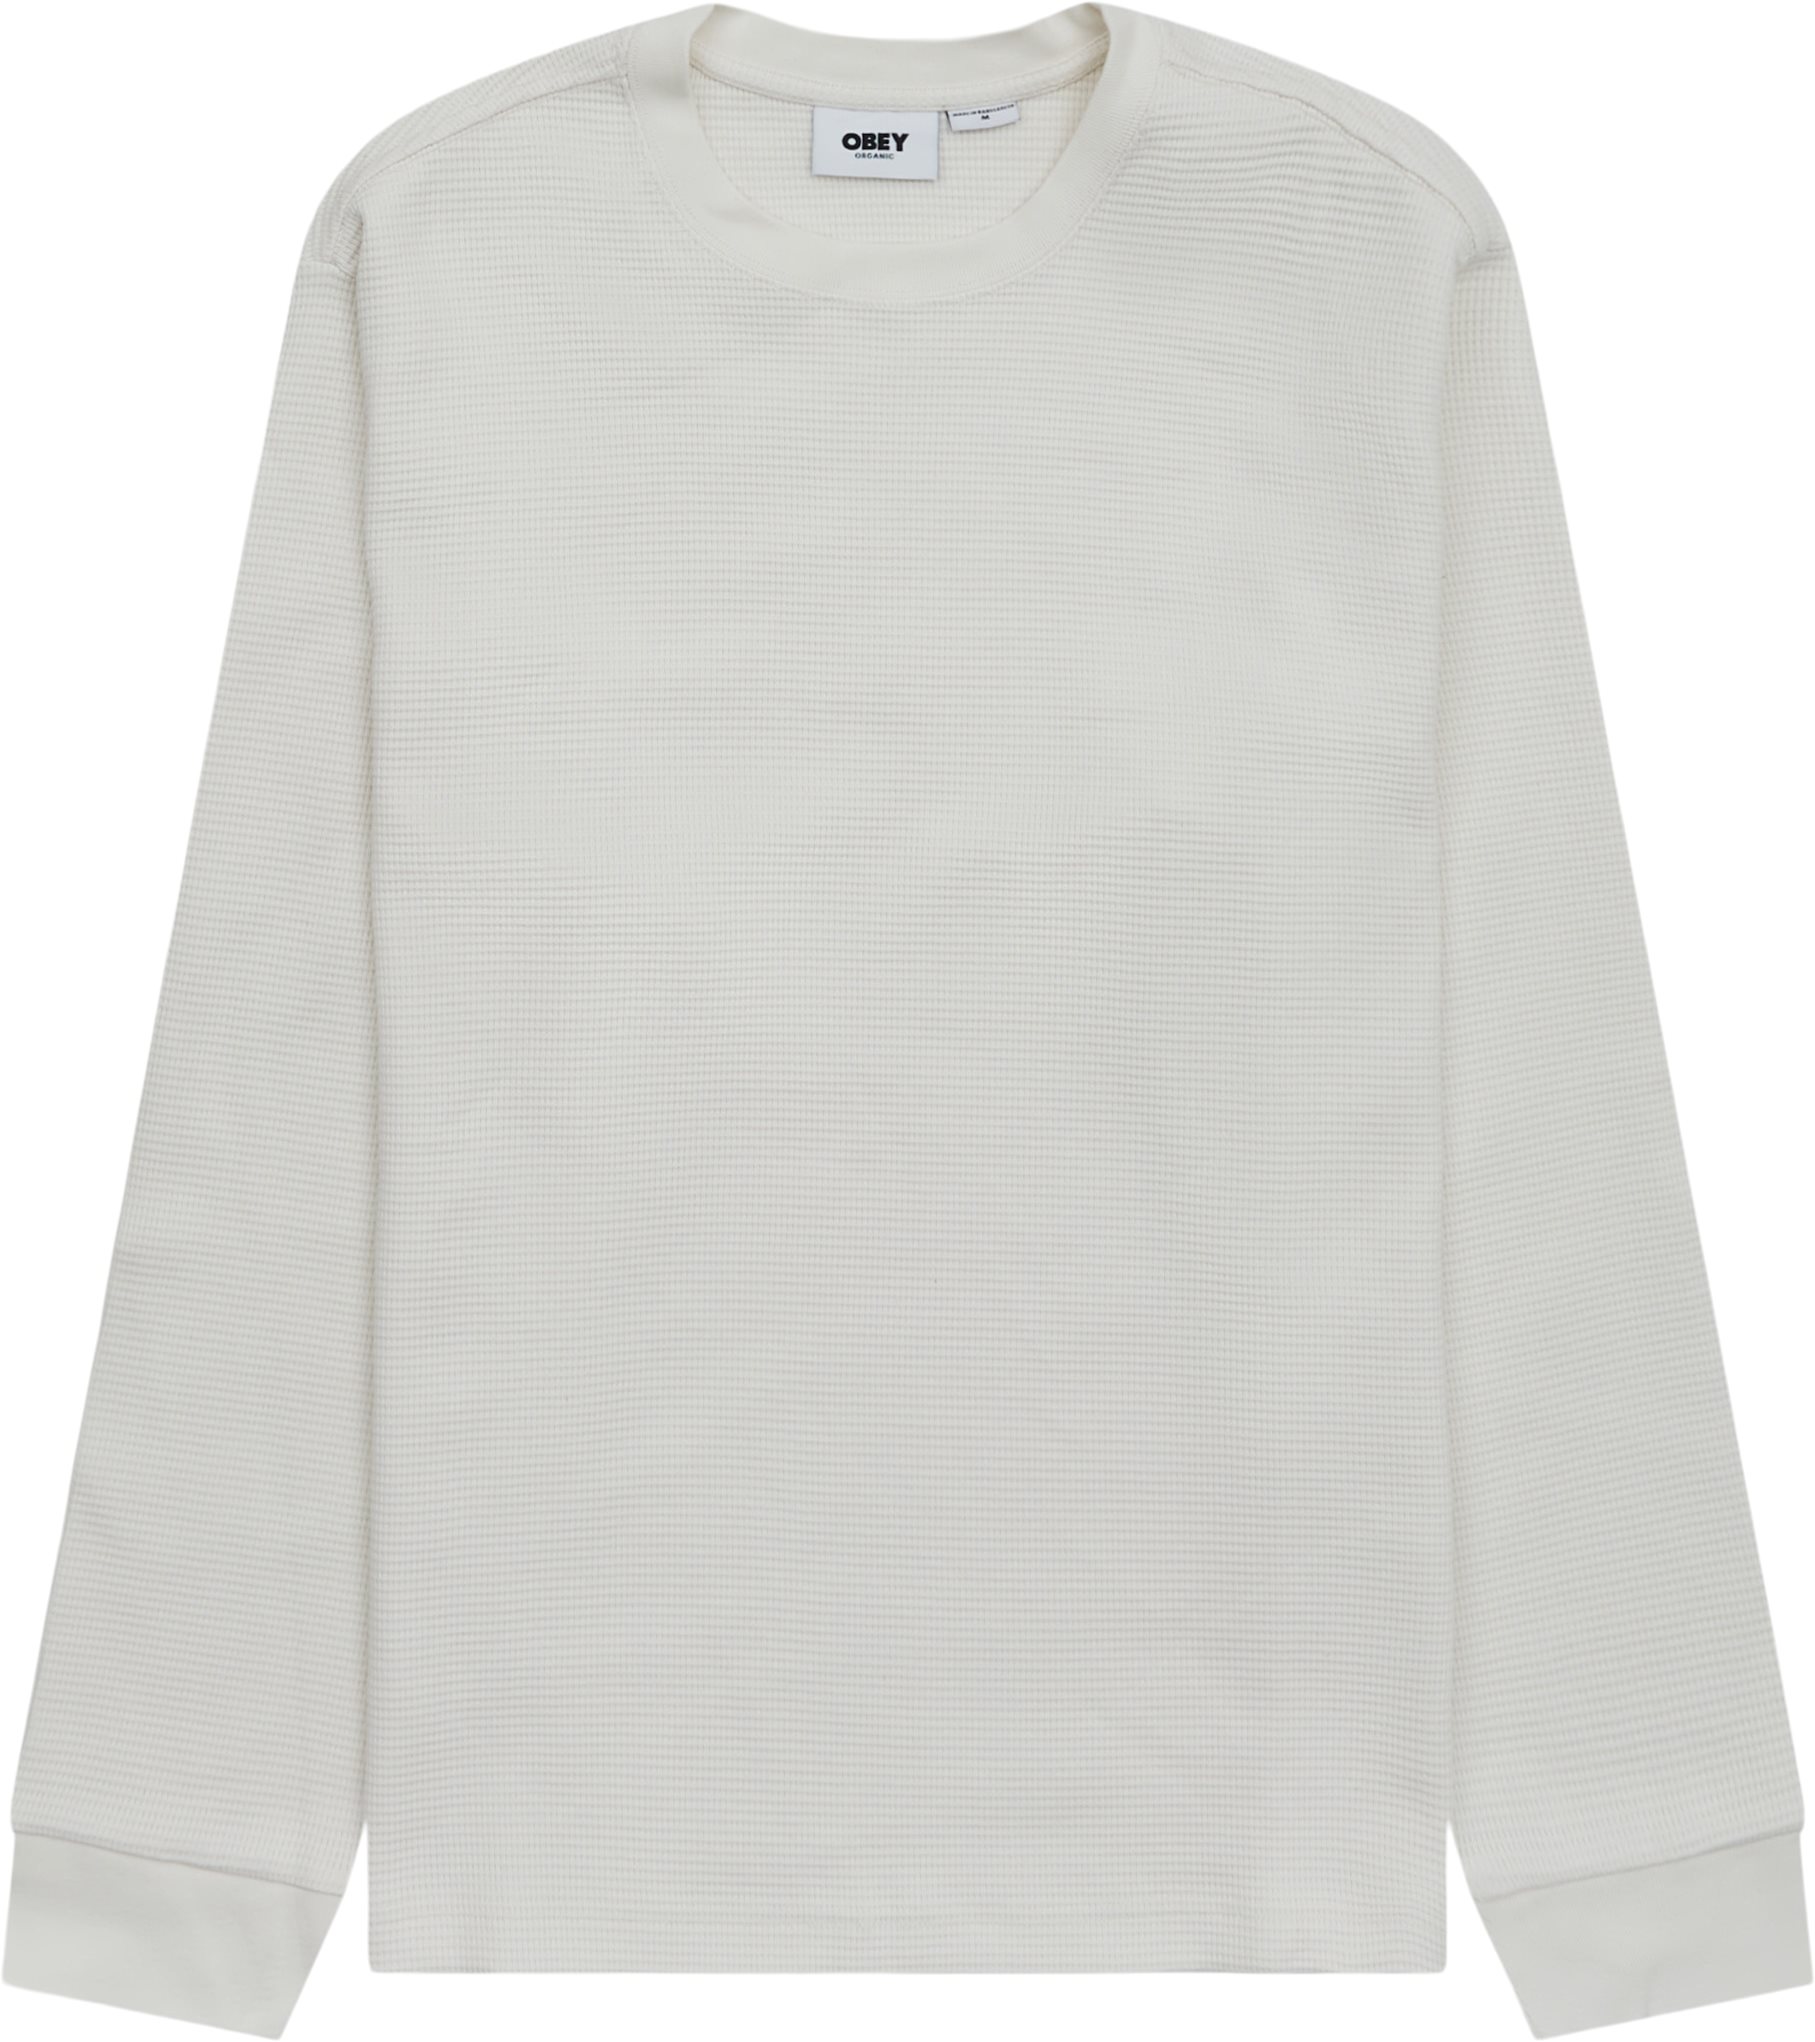 Obey Sweatshirts ESTABLISHED WORKS BOLD THERMAL LS 131030118 White